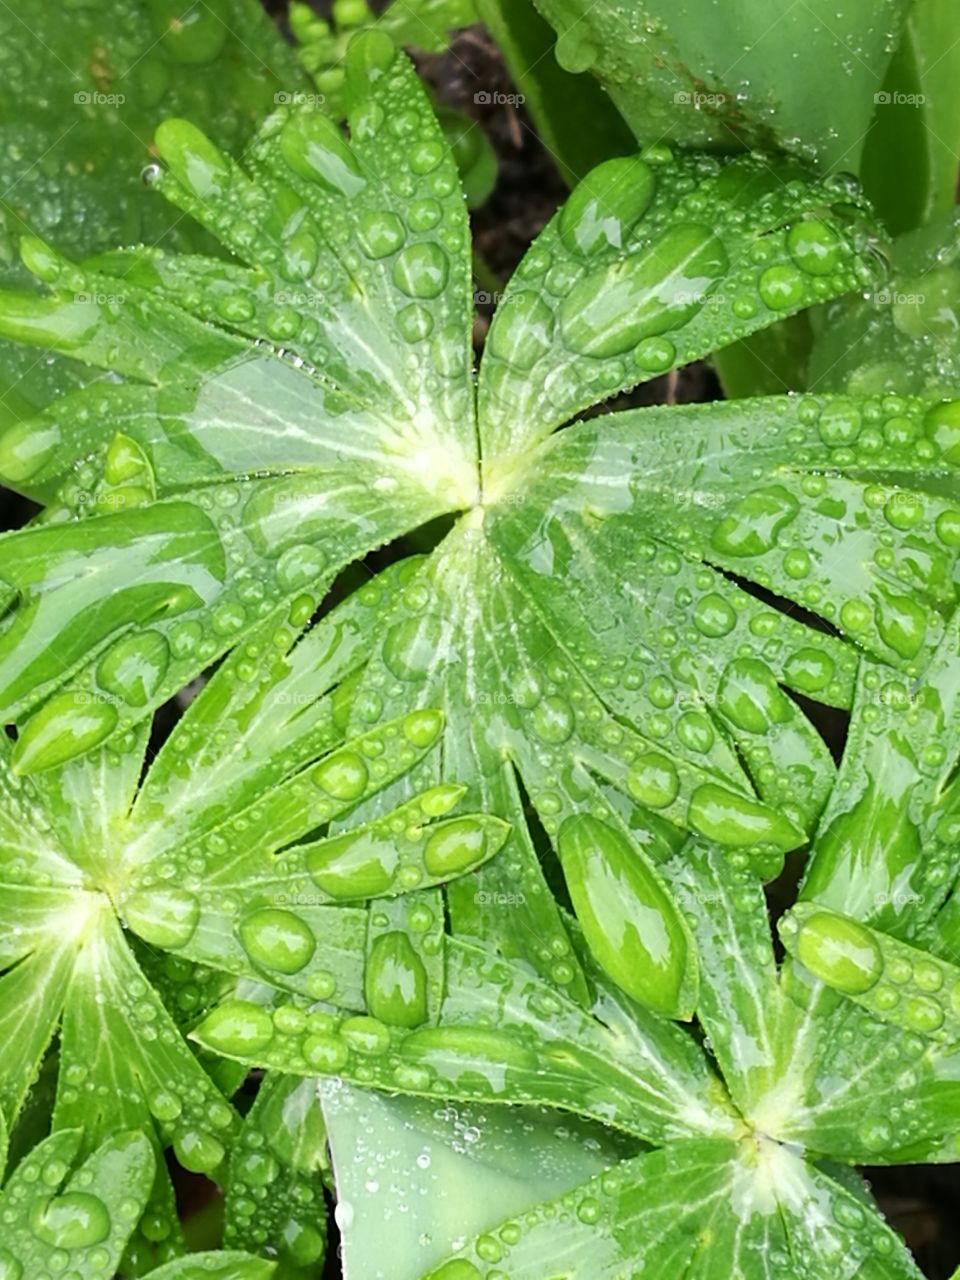 Wet Greenery